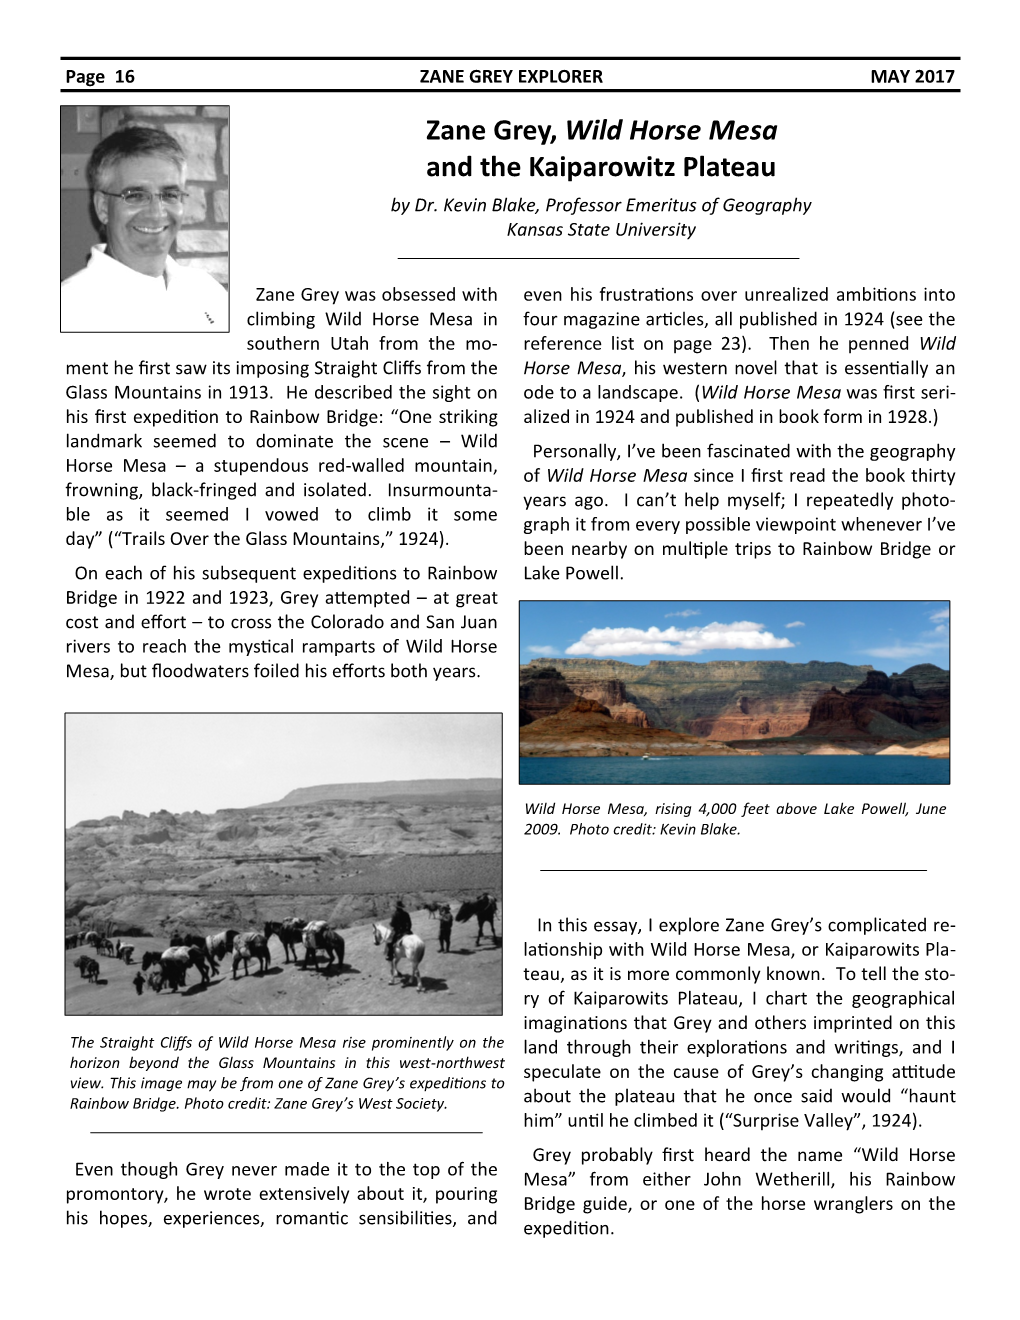 Zane Grey, Wild Horse Mesa and the Kaiparowitz Plateau